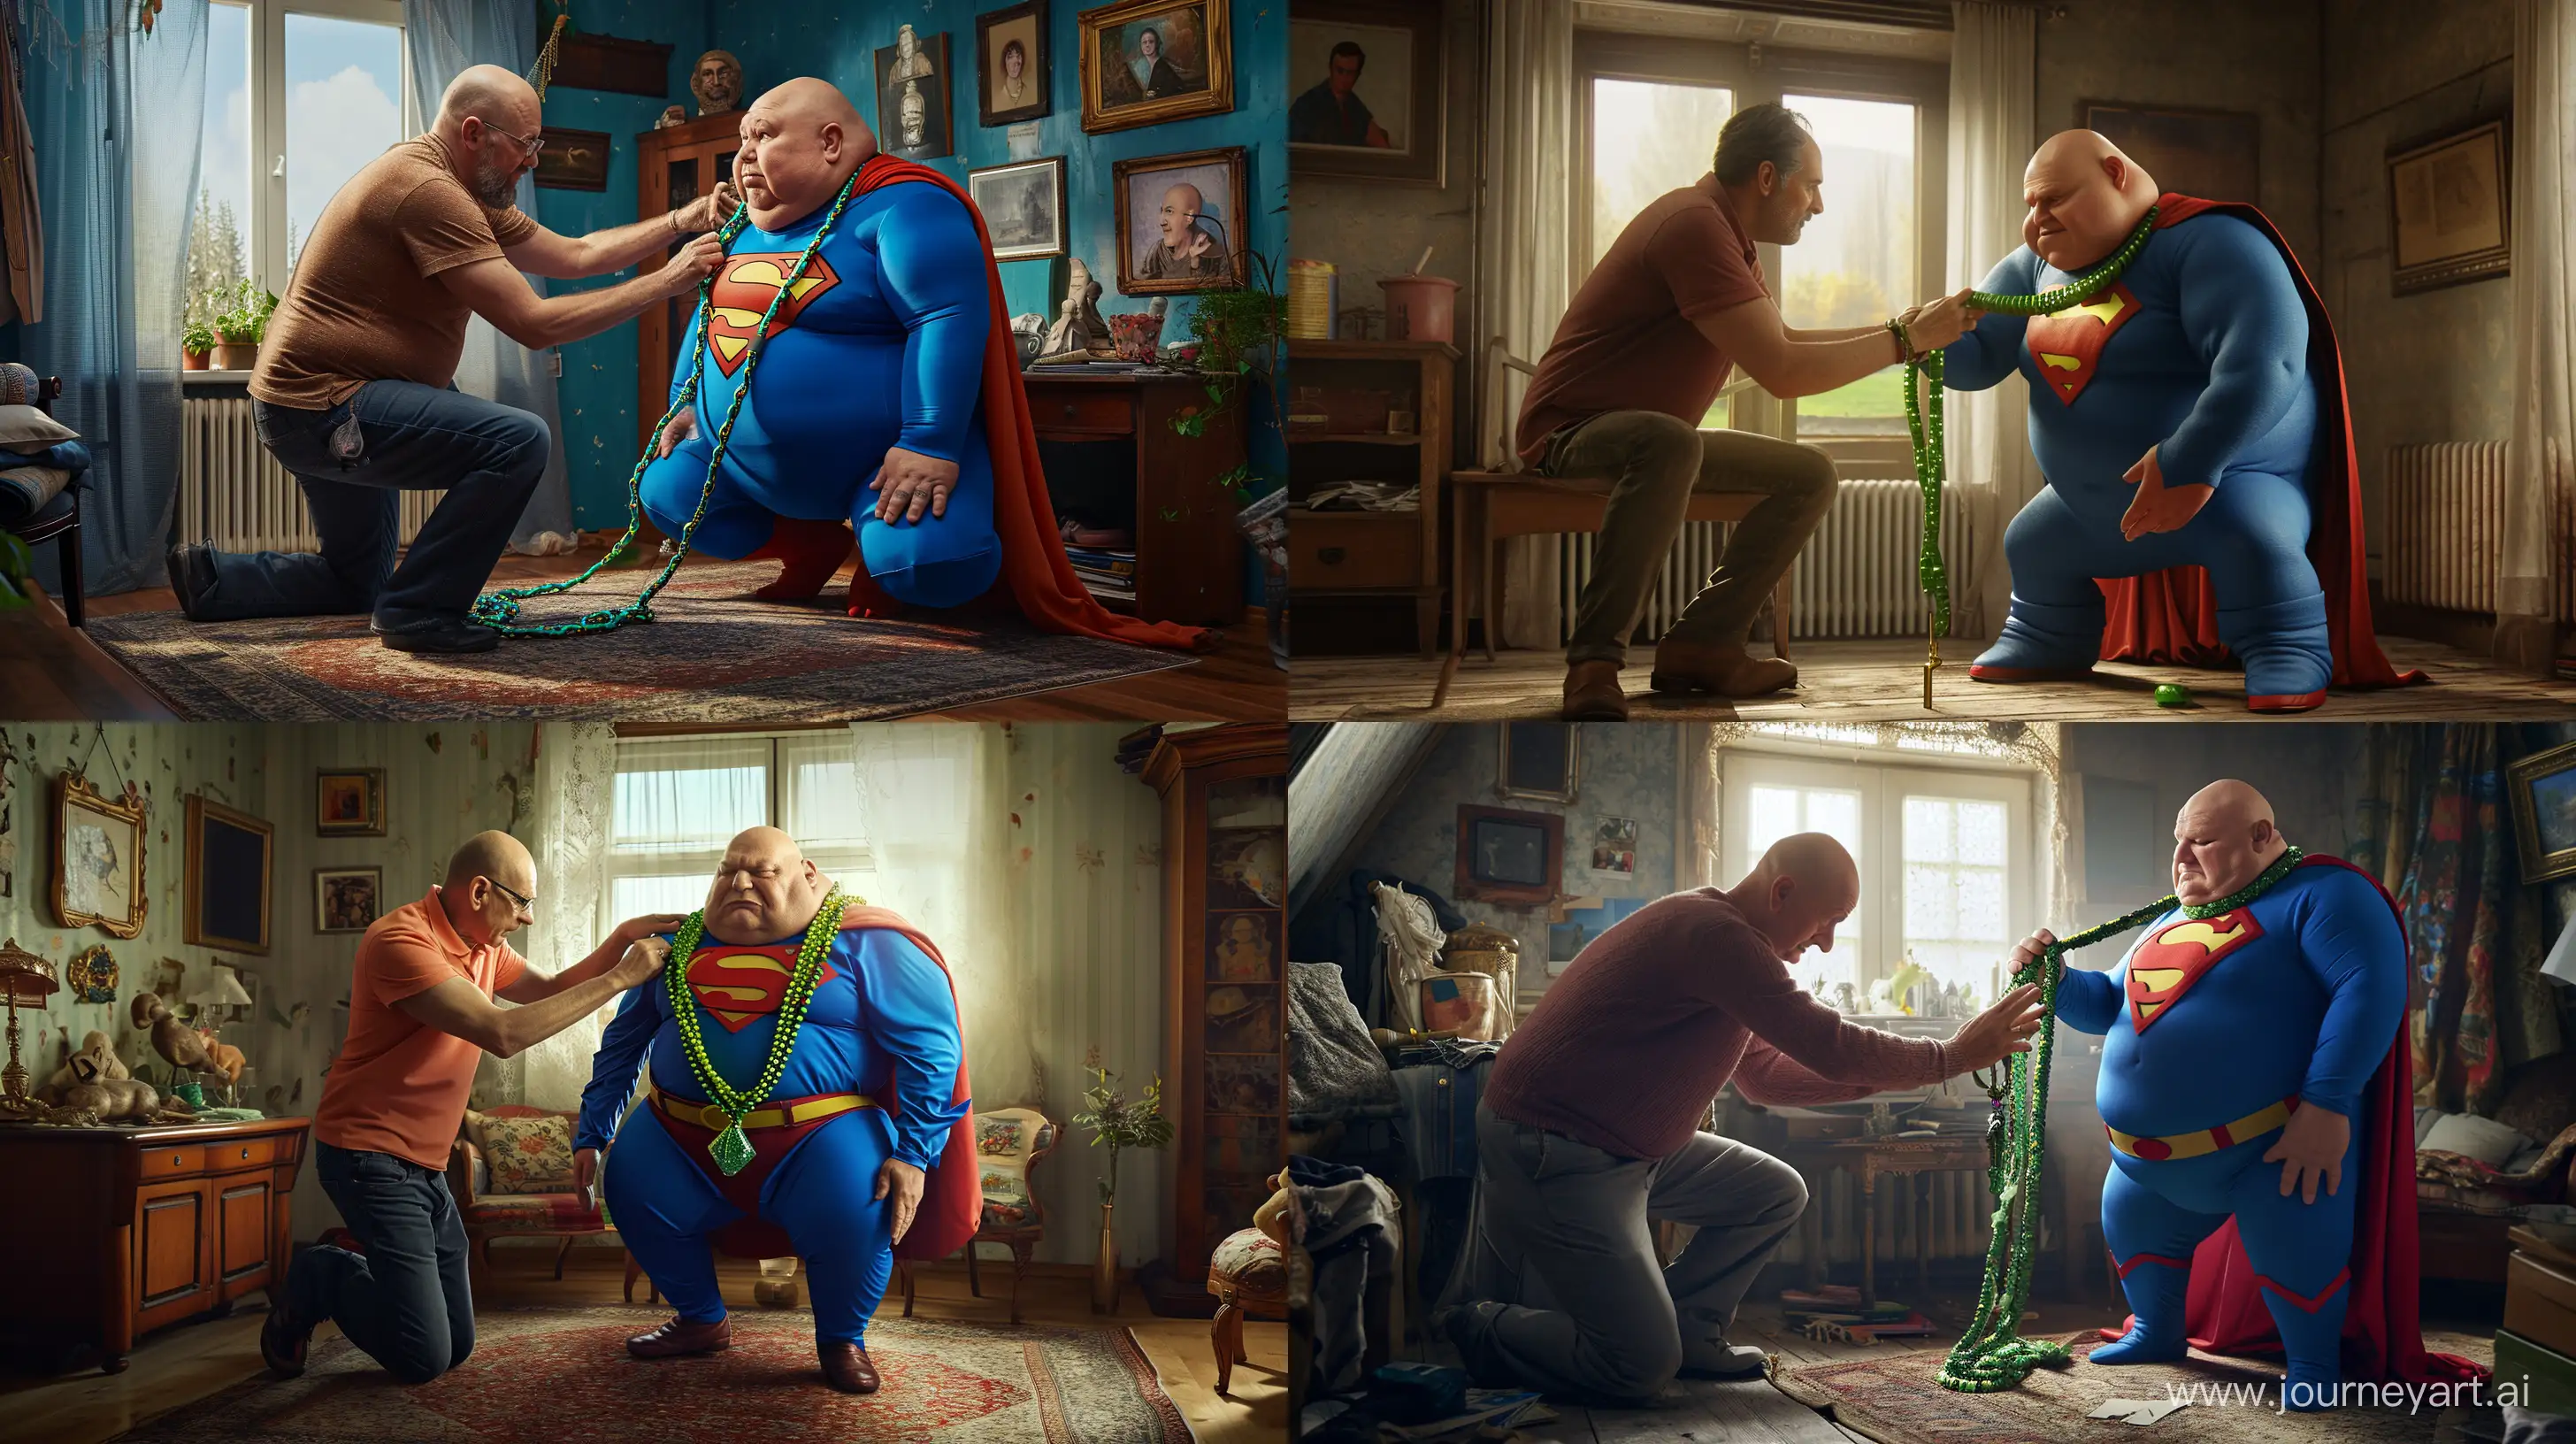 Elderly-Superman-Receives-Vibrant-Green-Necklace-in-Sunlit-Meadow